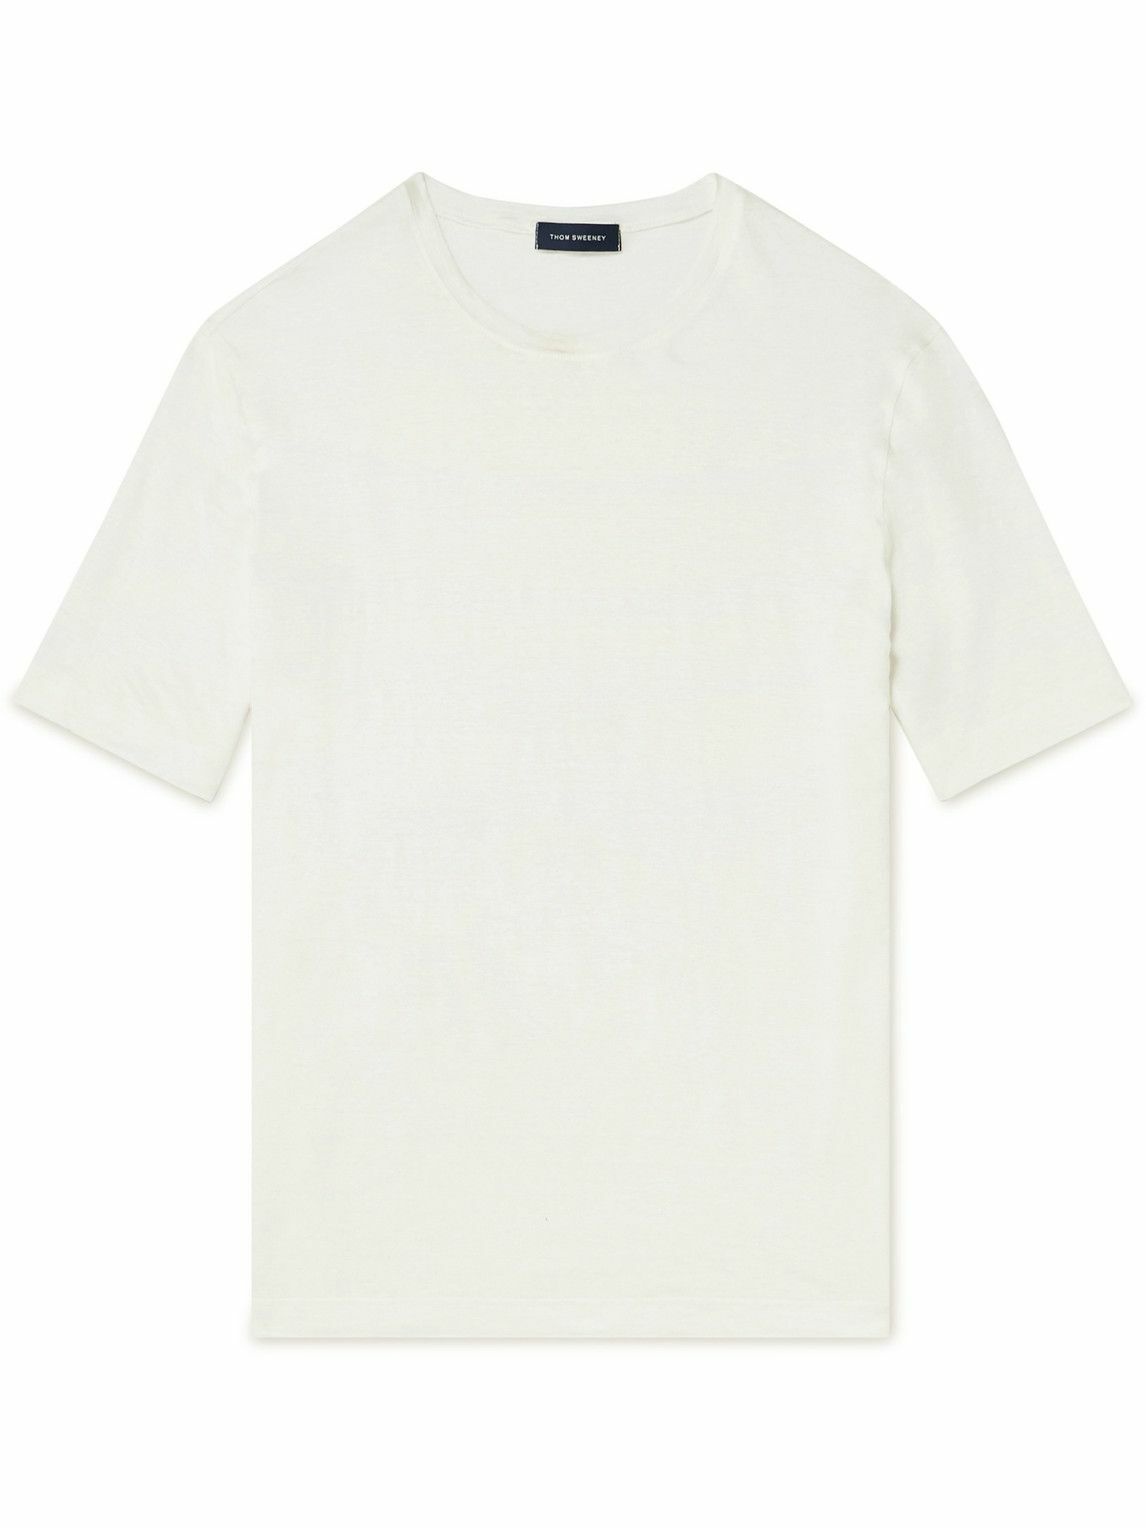 Thom Sweeney - Stretch-Linen T-Shirt - White Thom Sweeney